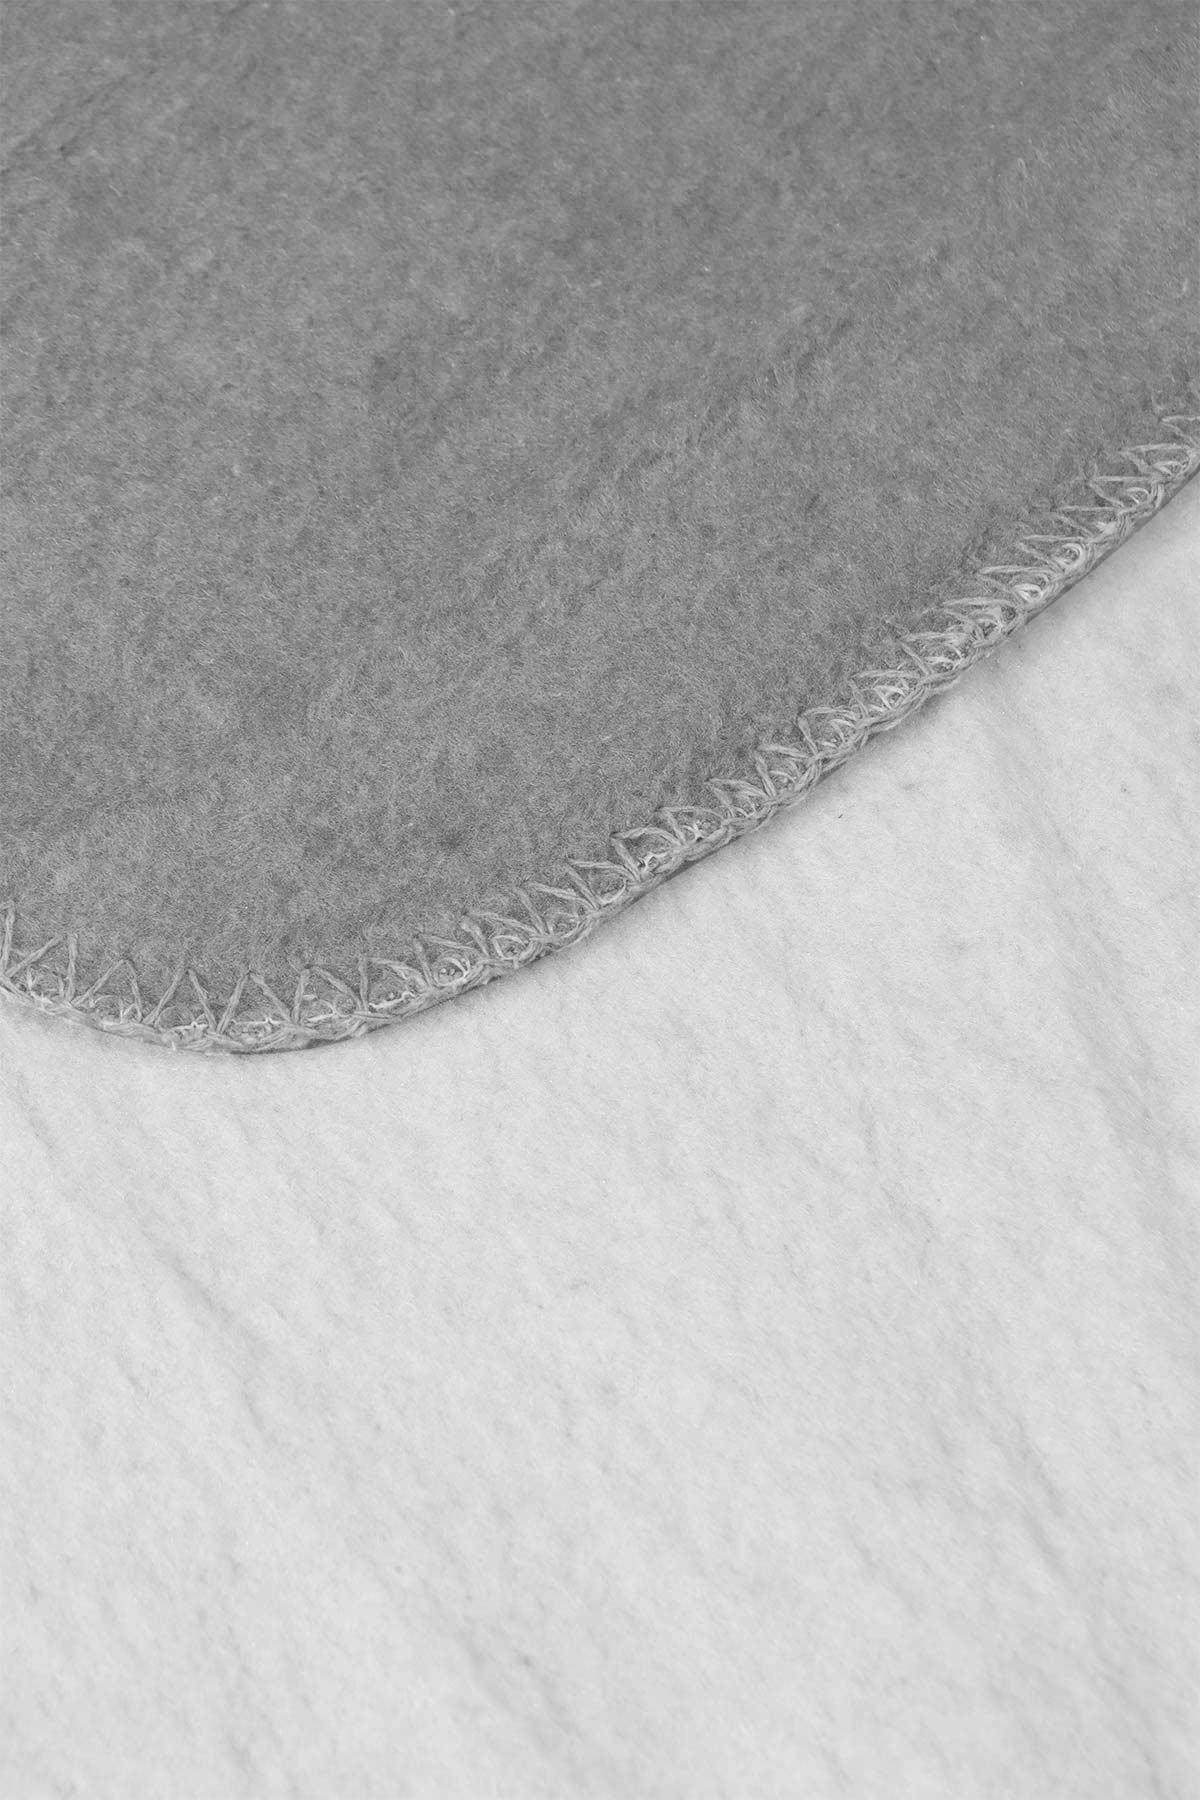 yesilhome cift kisilik pamuk battaniye cift tarafli battaniye gri beyaz 120005.jpg